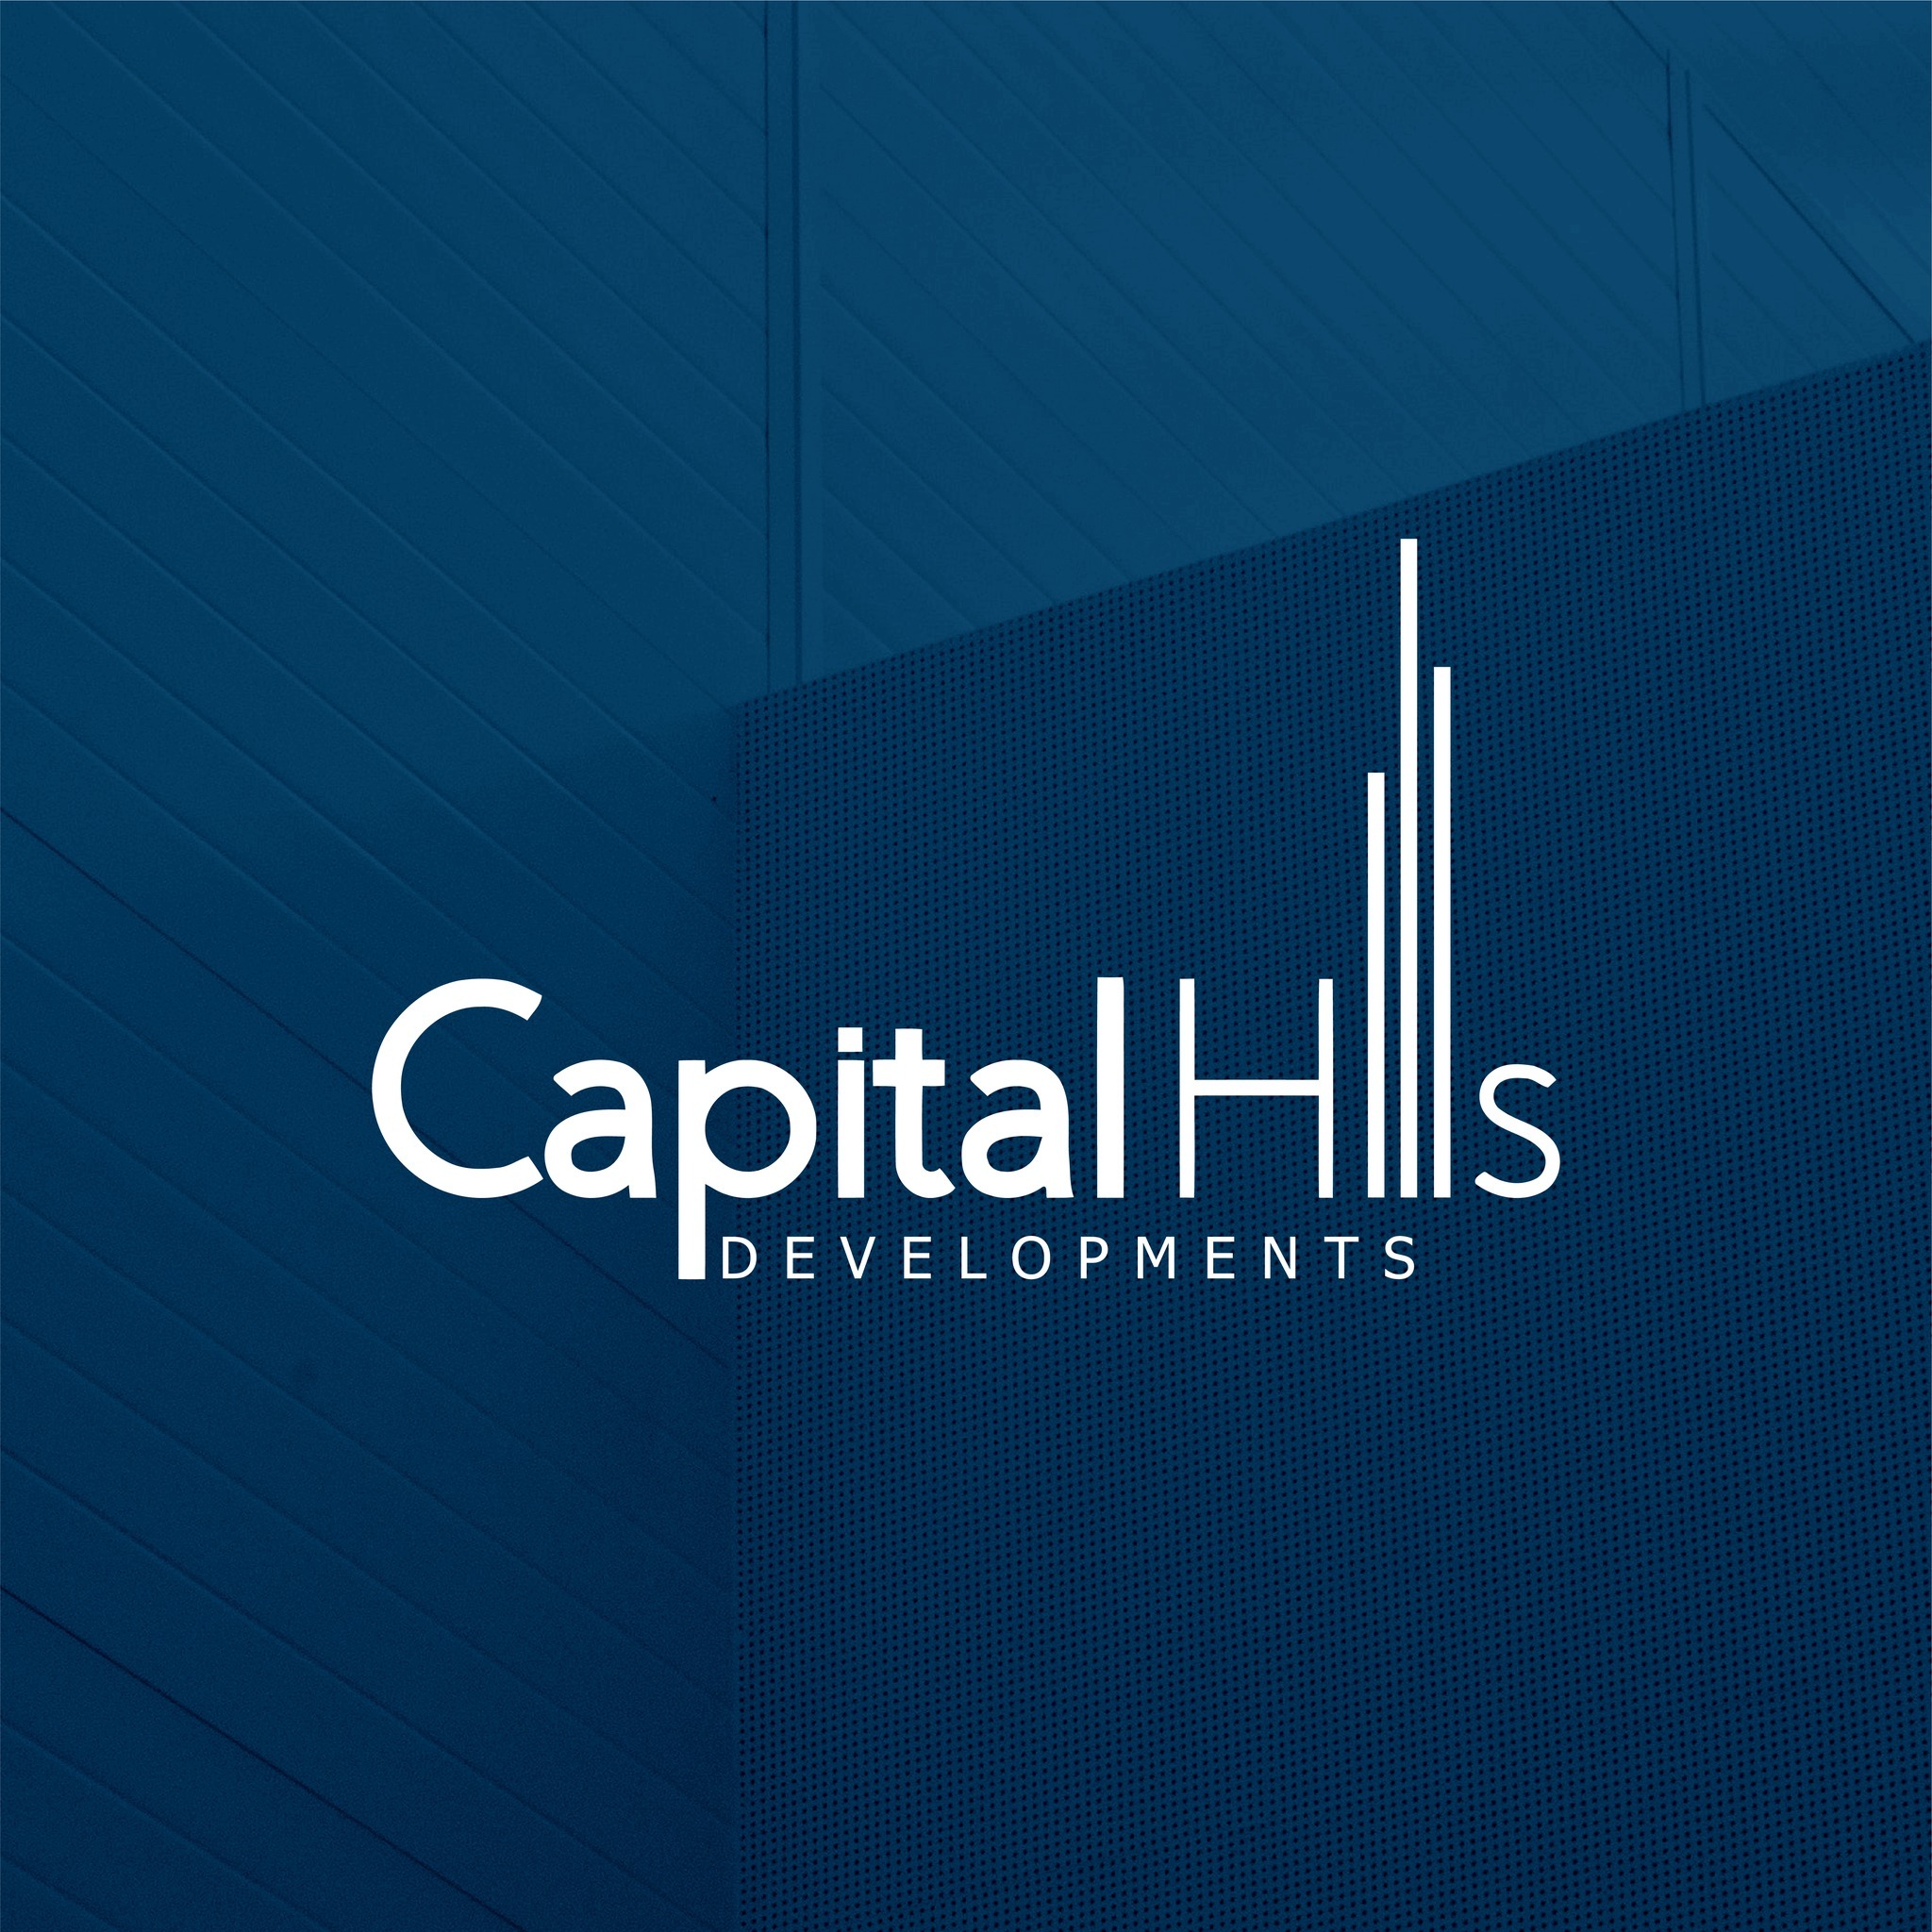 Capital Hills Developments